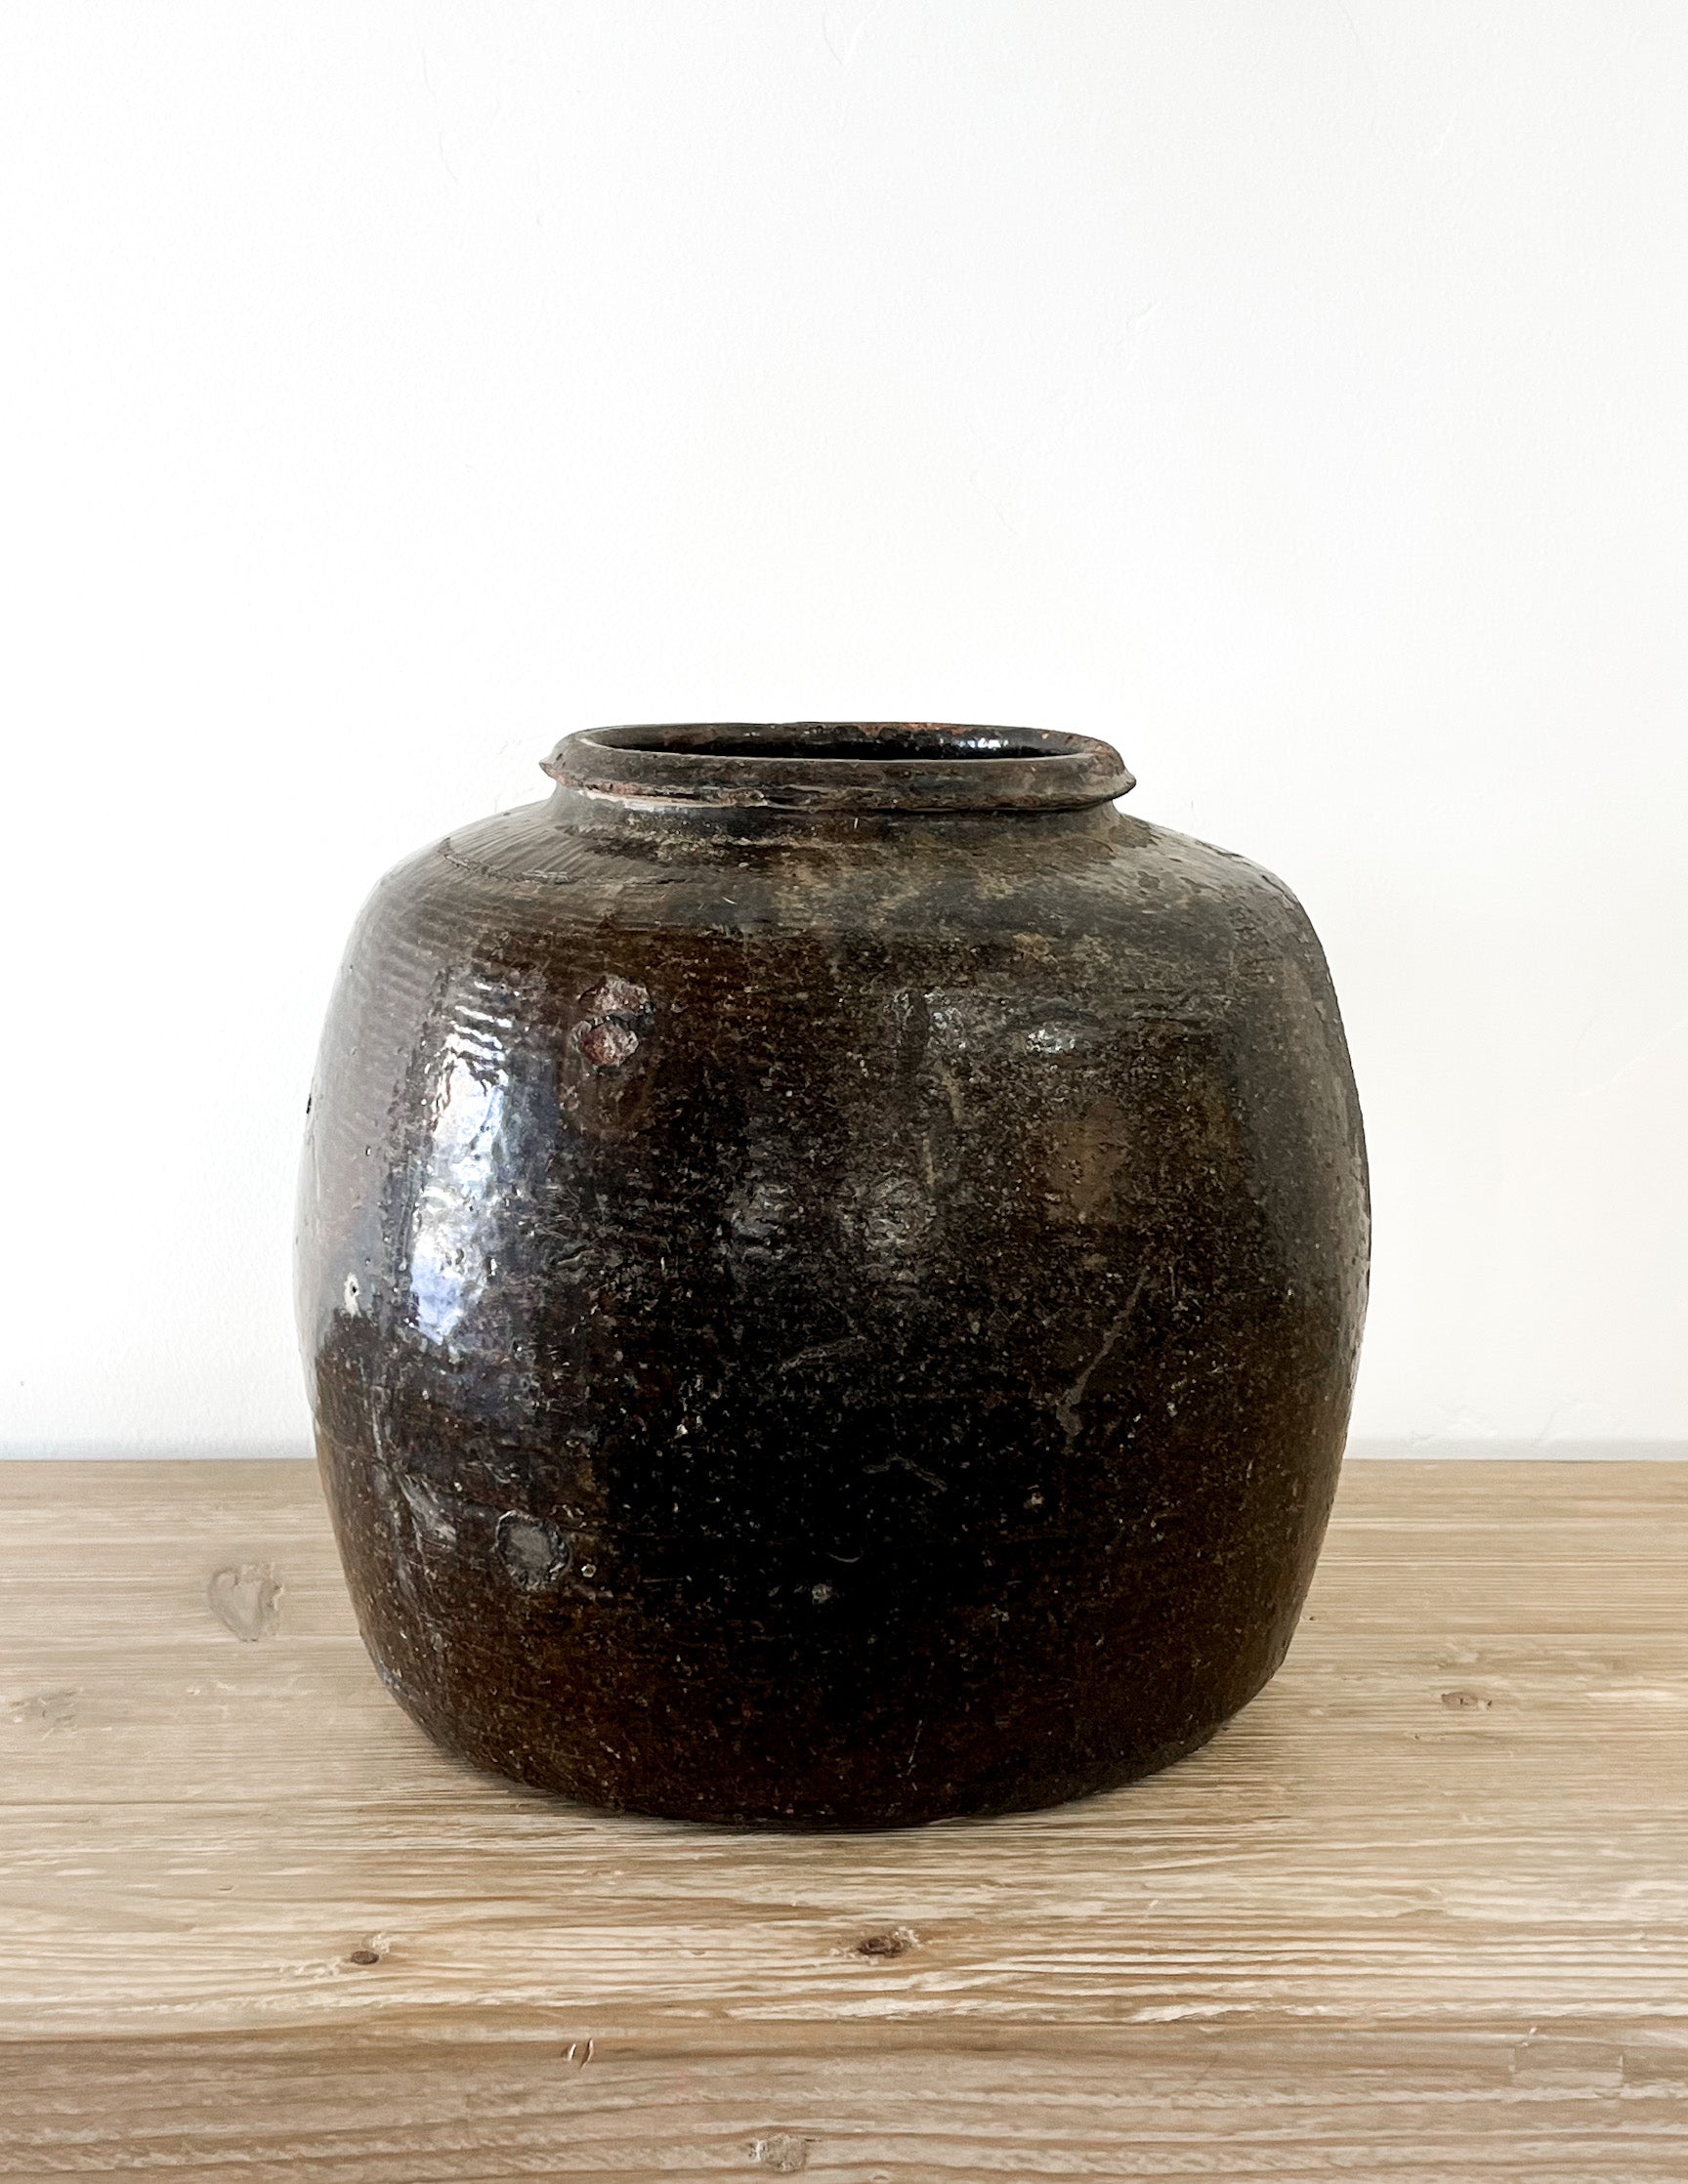 Vintage Rustic Terracotta Pots